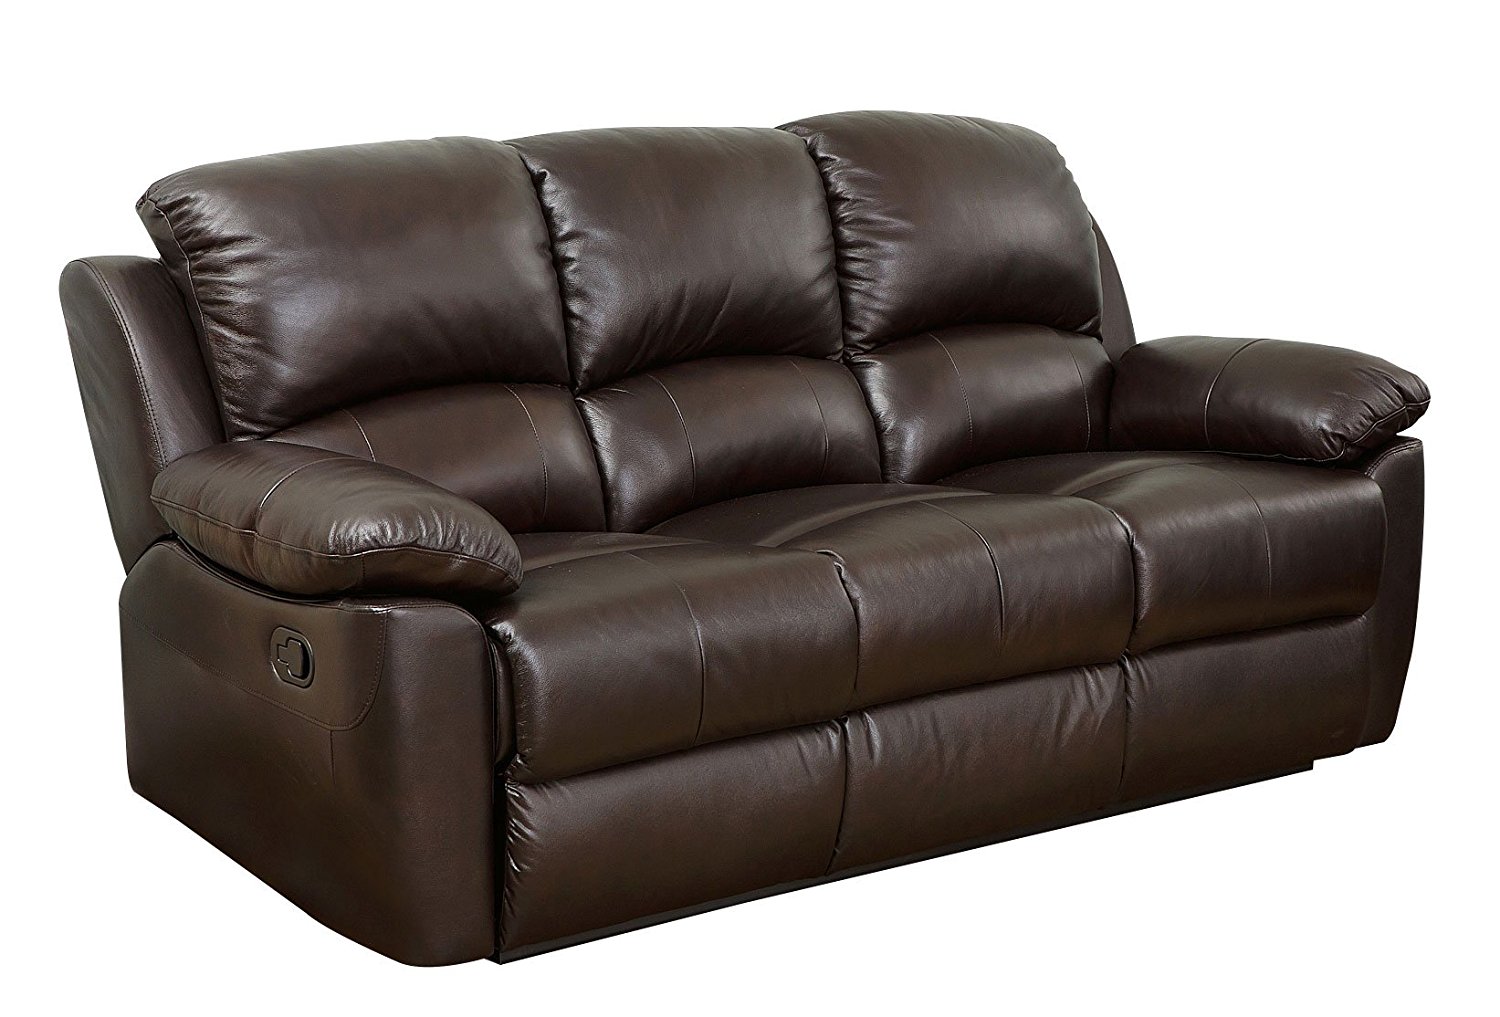 abbyson positano leather sofa